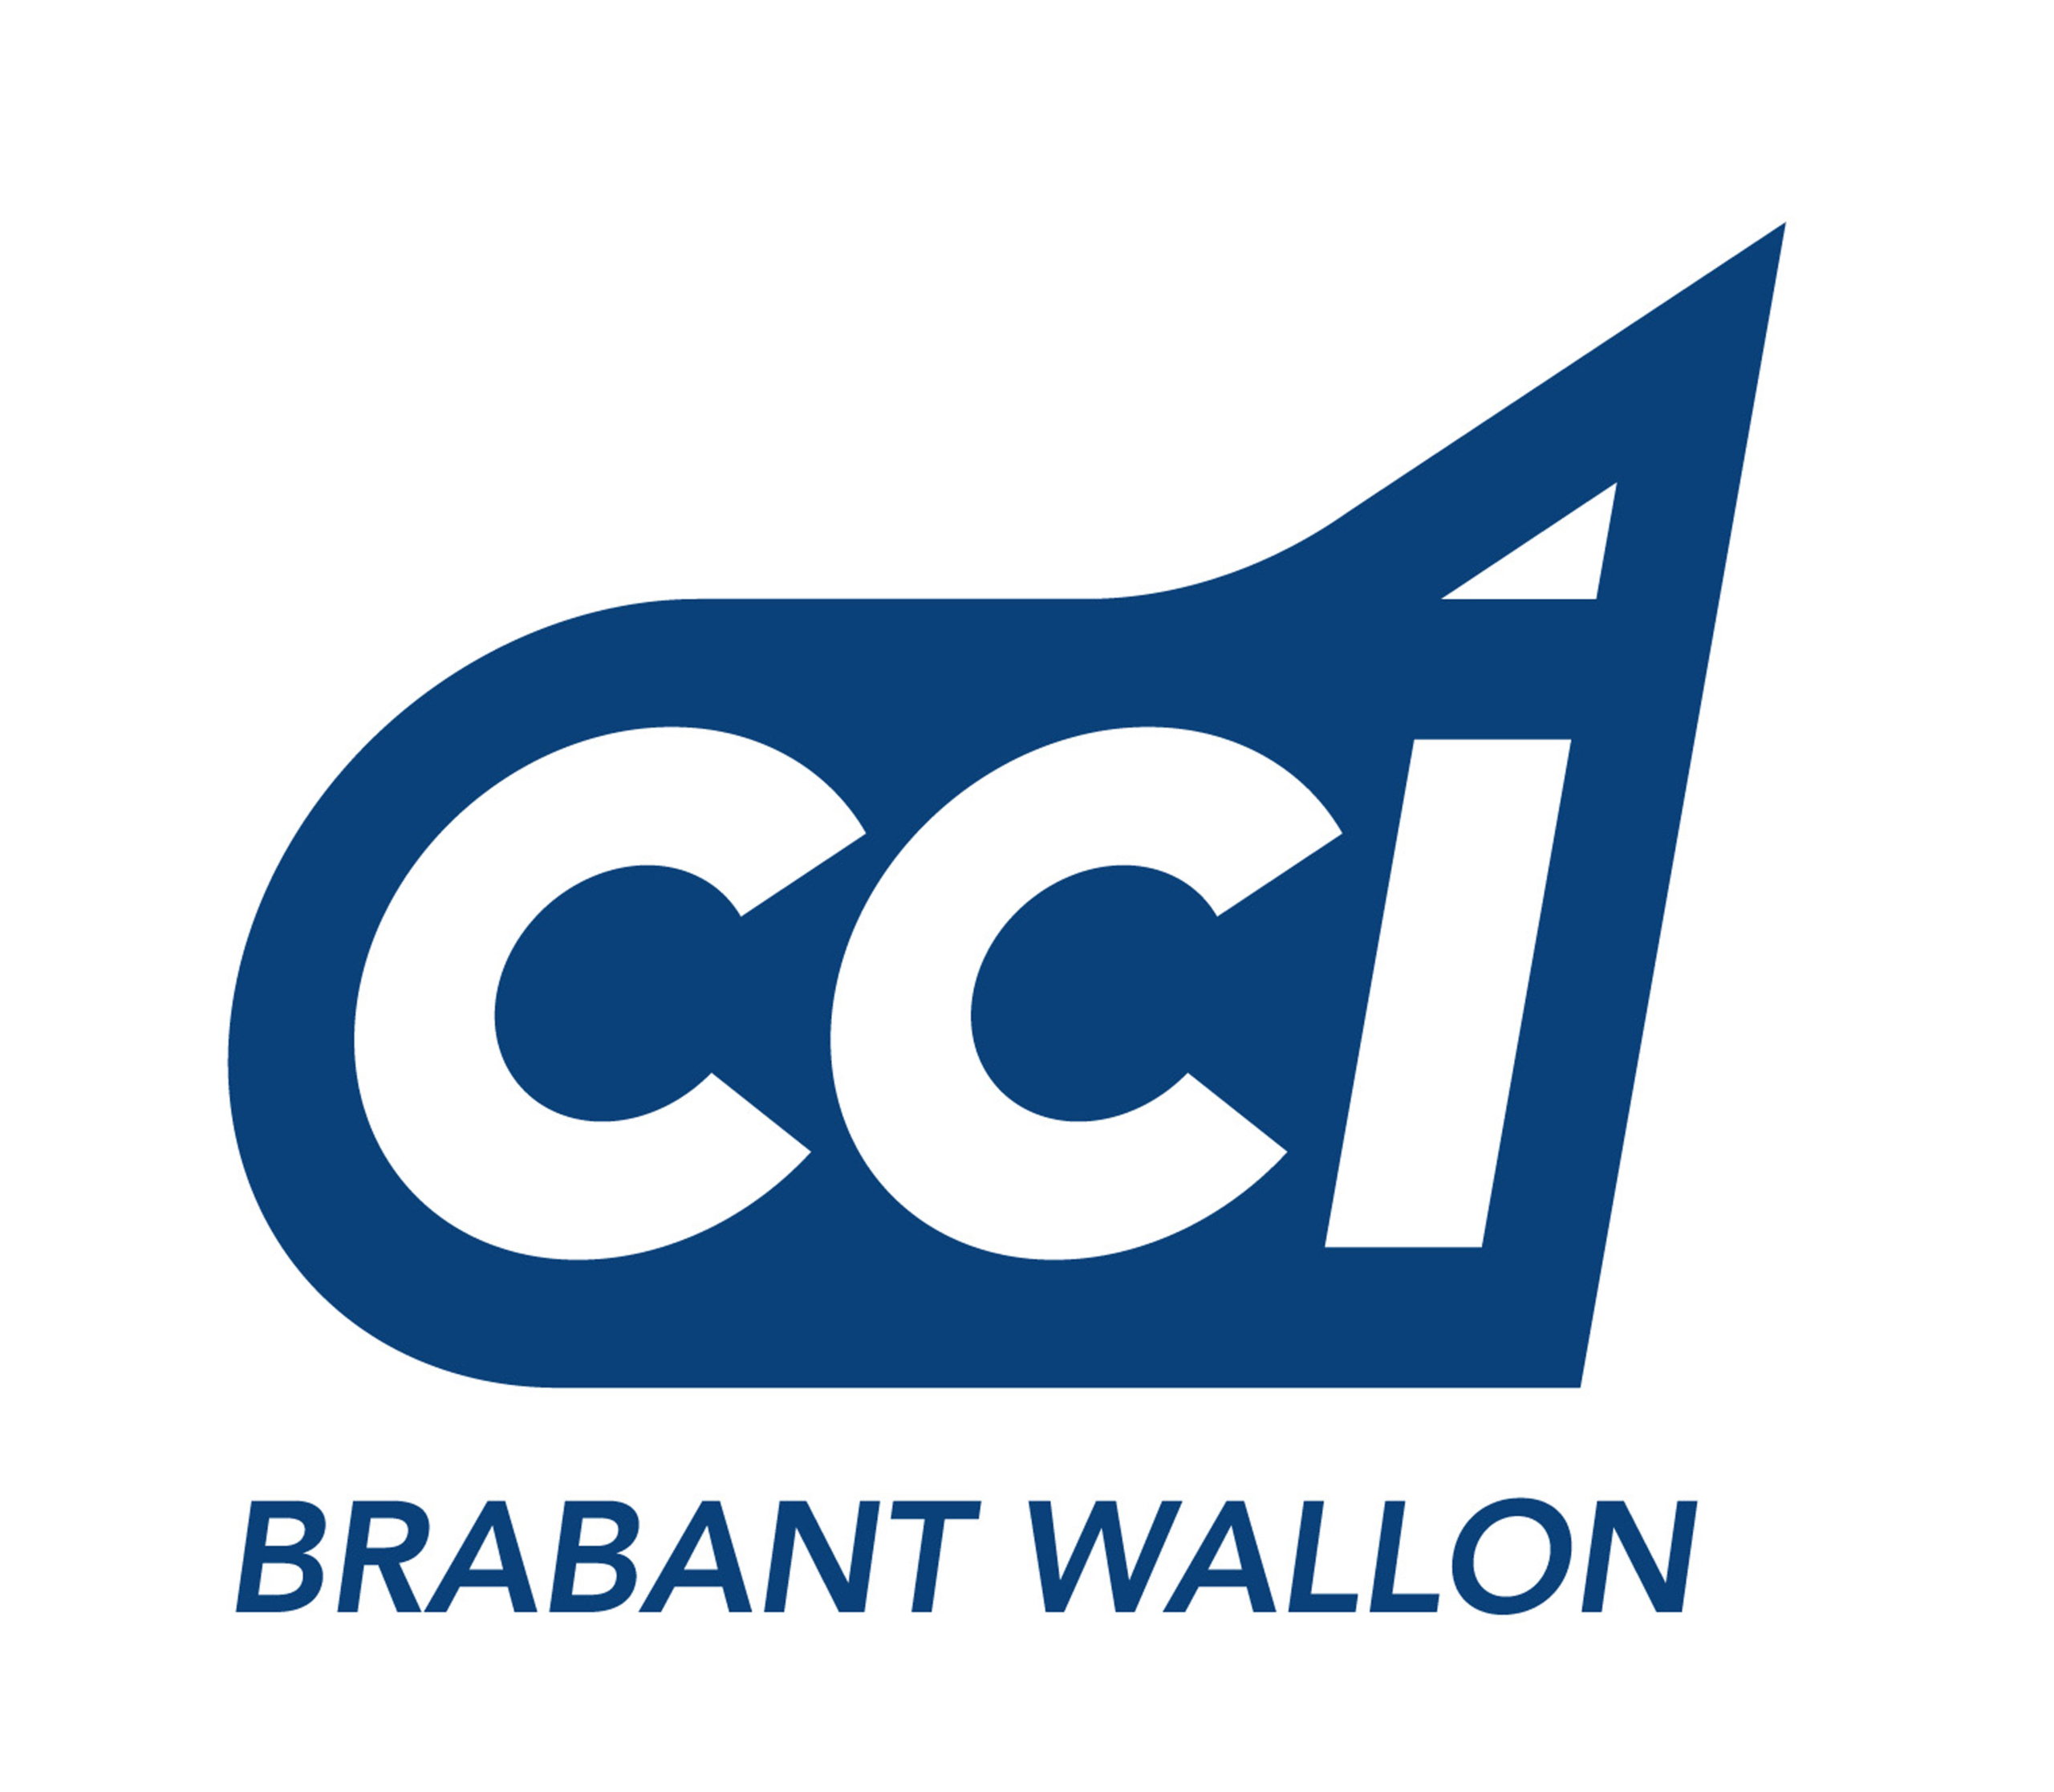 CCI Brabant Wallon